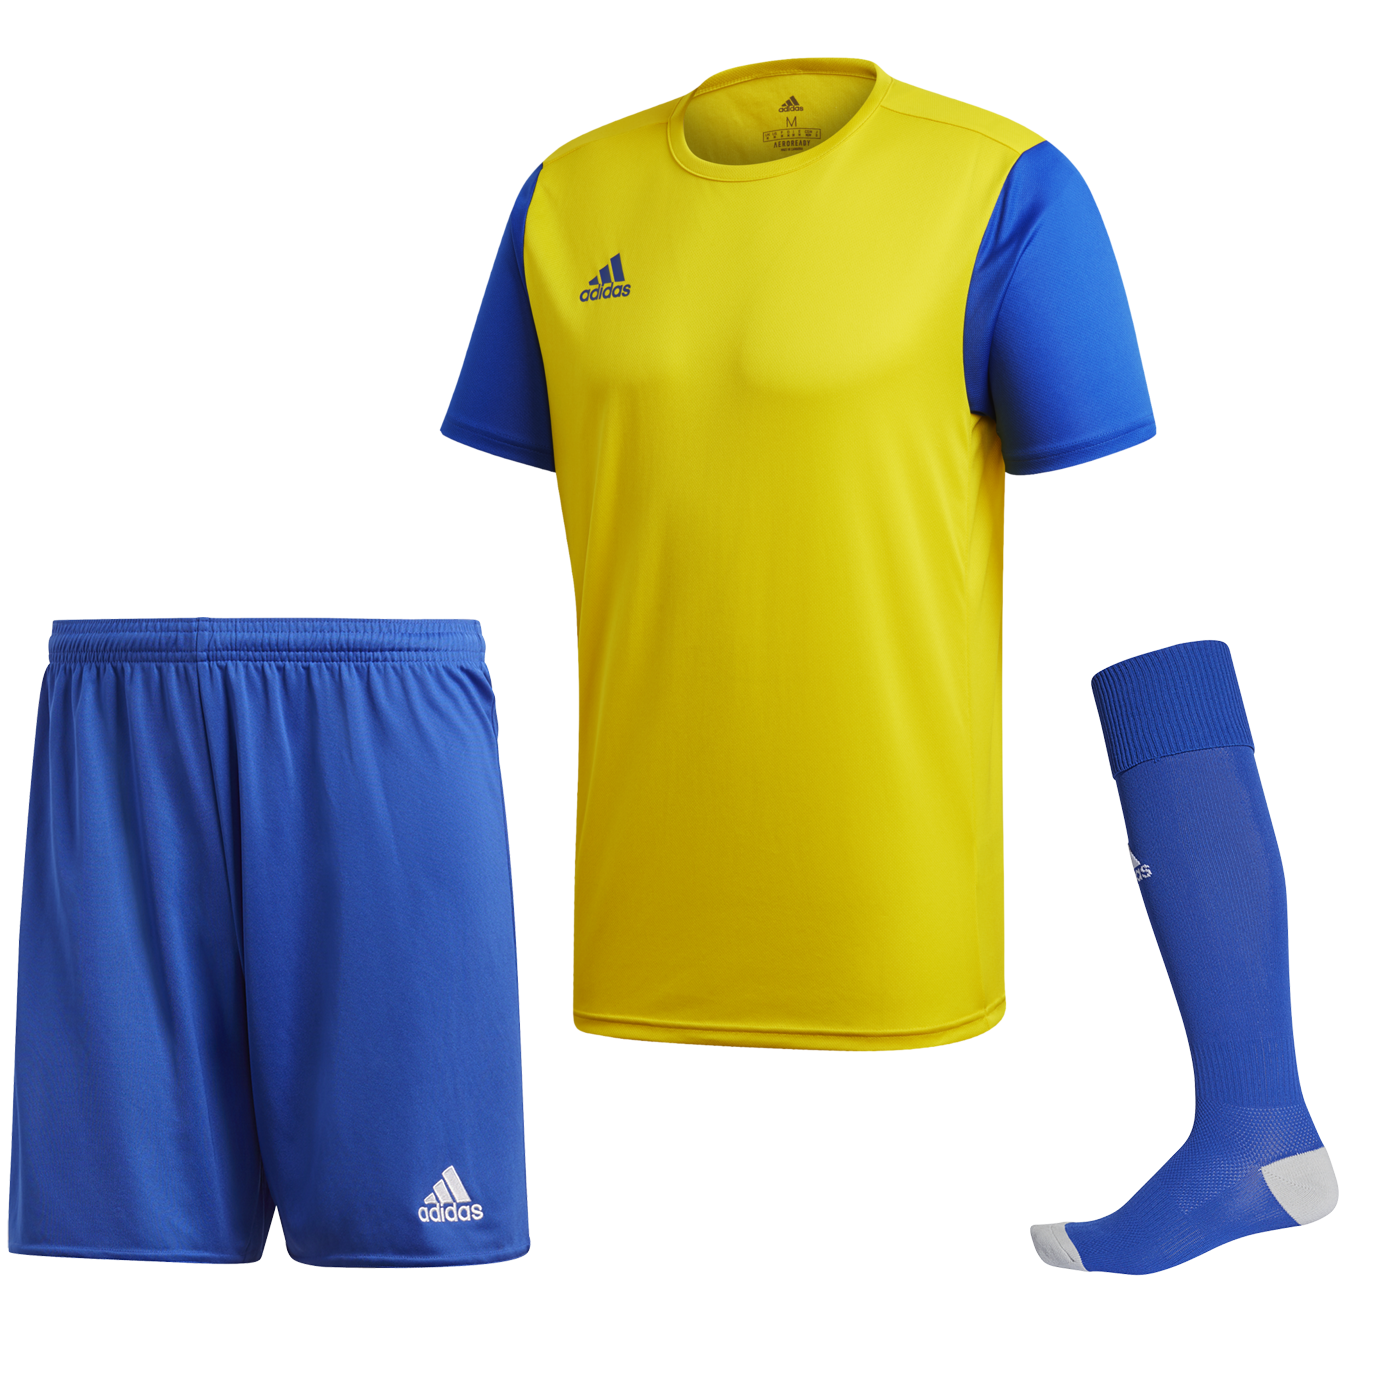 Adidas Estro 19 žlutá/modrá UK Junior L Dětské